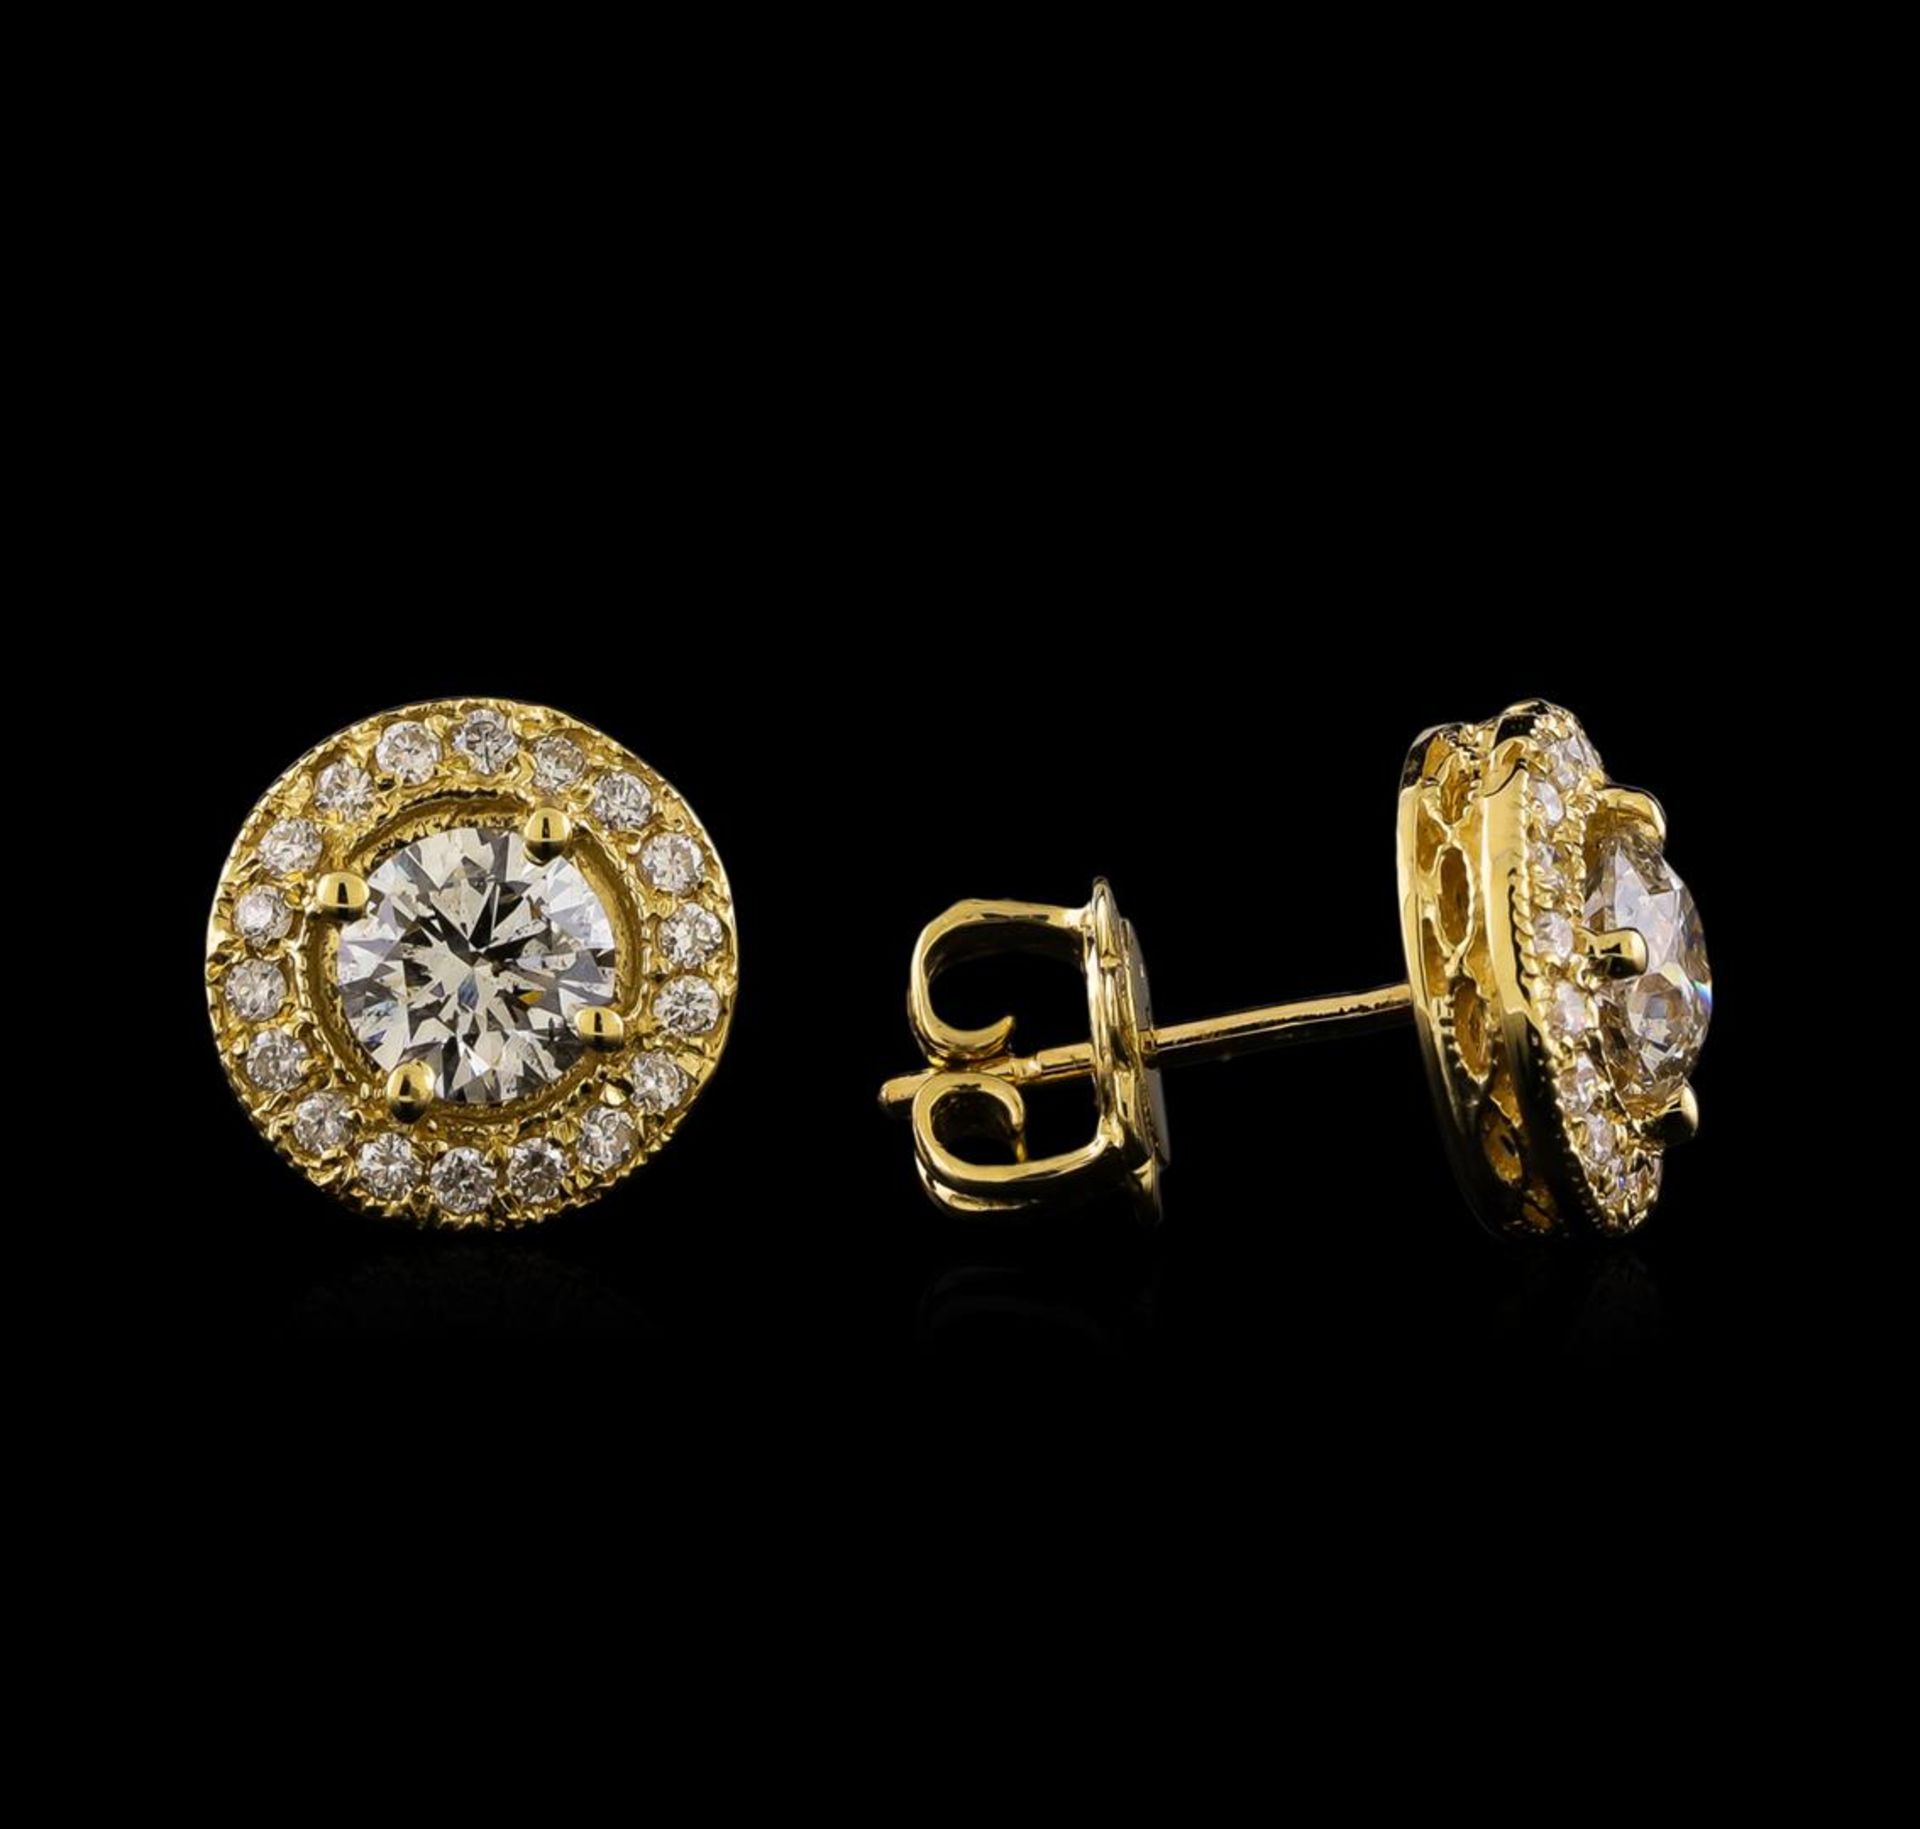 1.38 ctw Diamond Earrings - 14KT Yellow Gold - Image 2 of 3